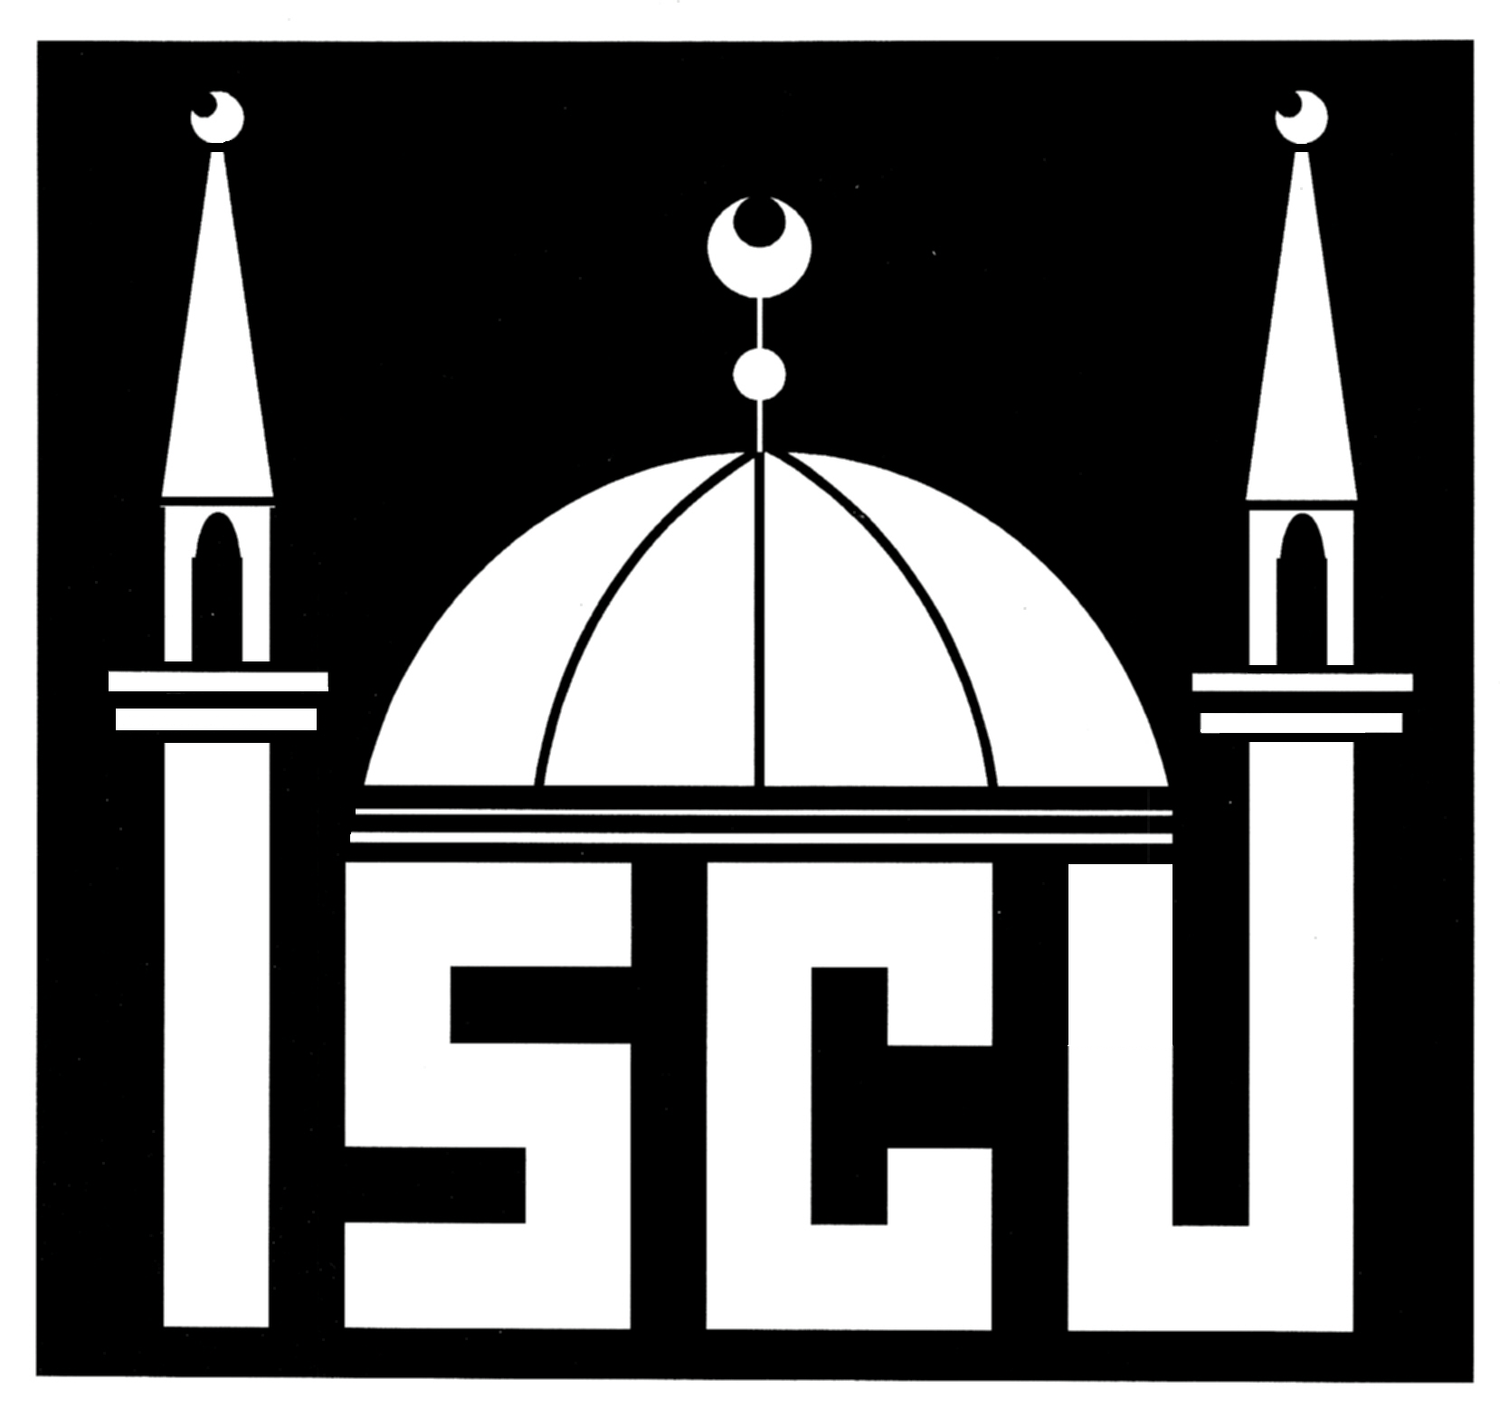 https://sosspeace.org/wp-content/uploads/2020/07/iscj_logo.png